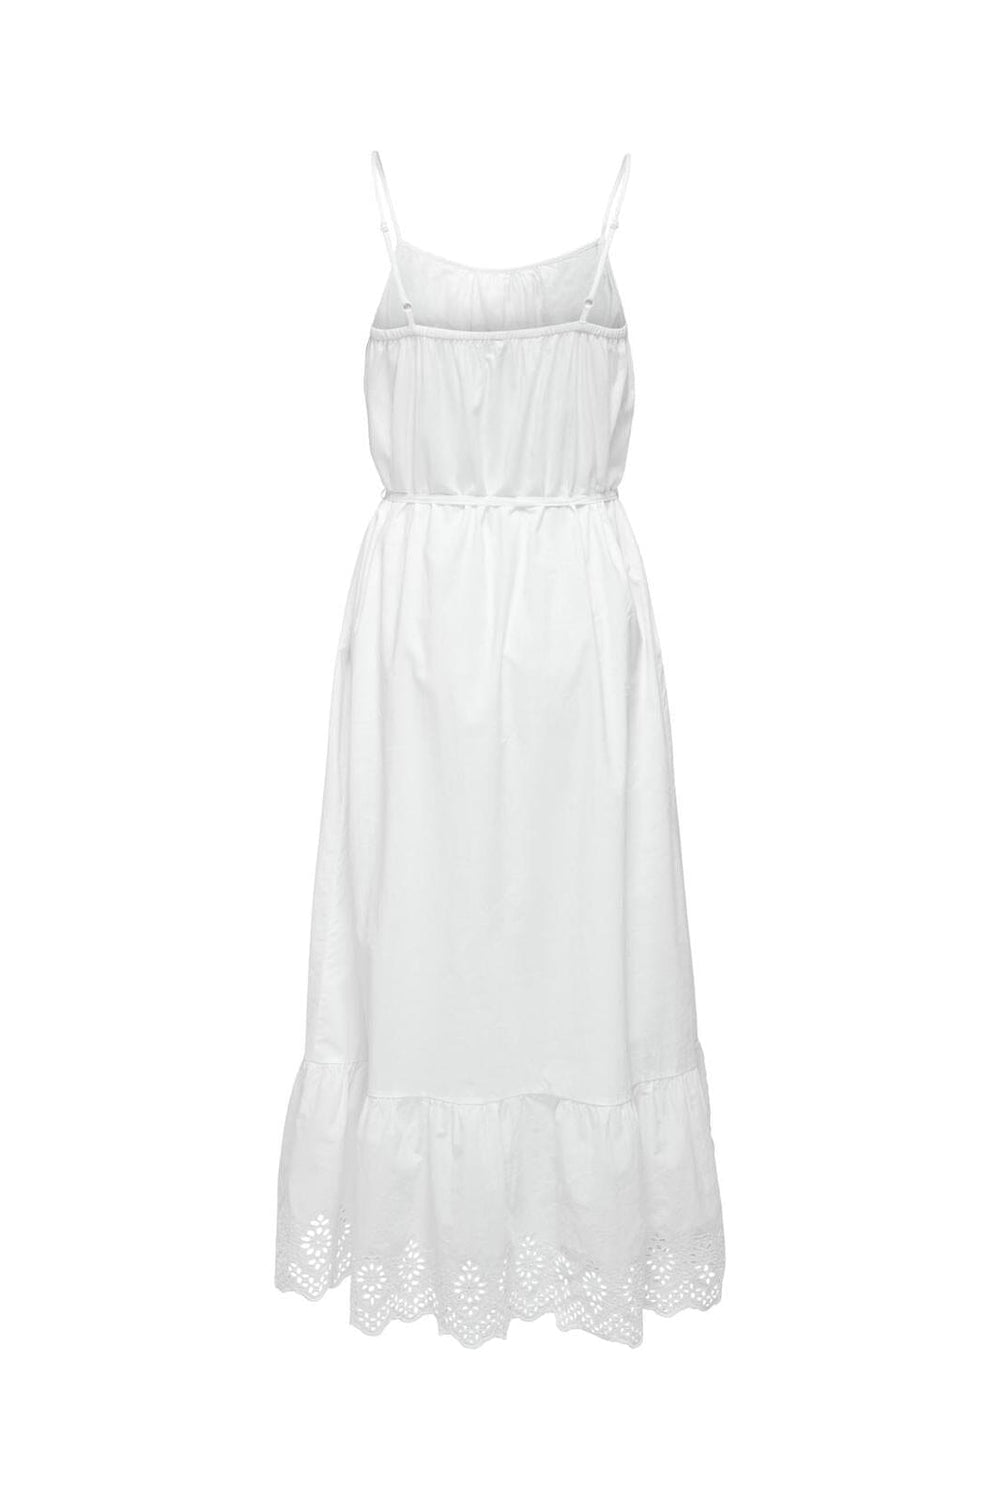 Only - Onllou Life Emb Strap Ankel Dress - 4428013 Bright White